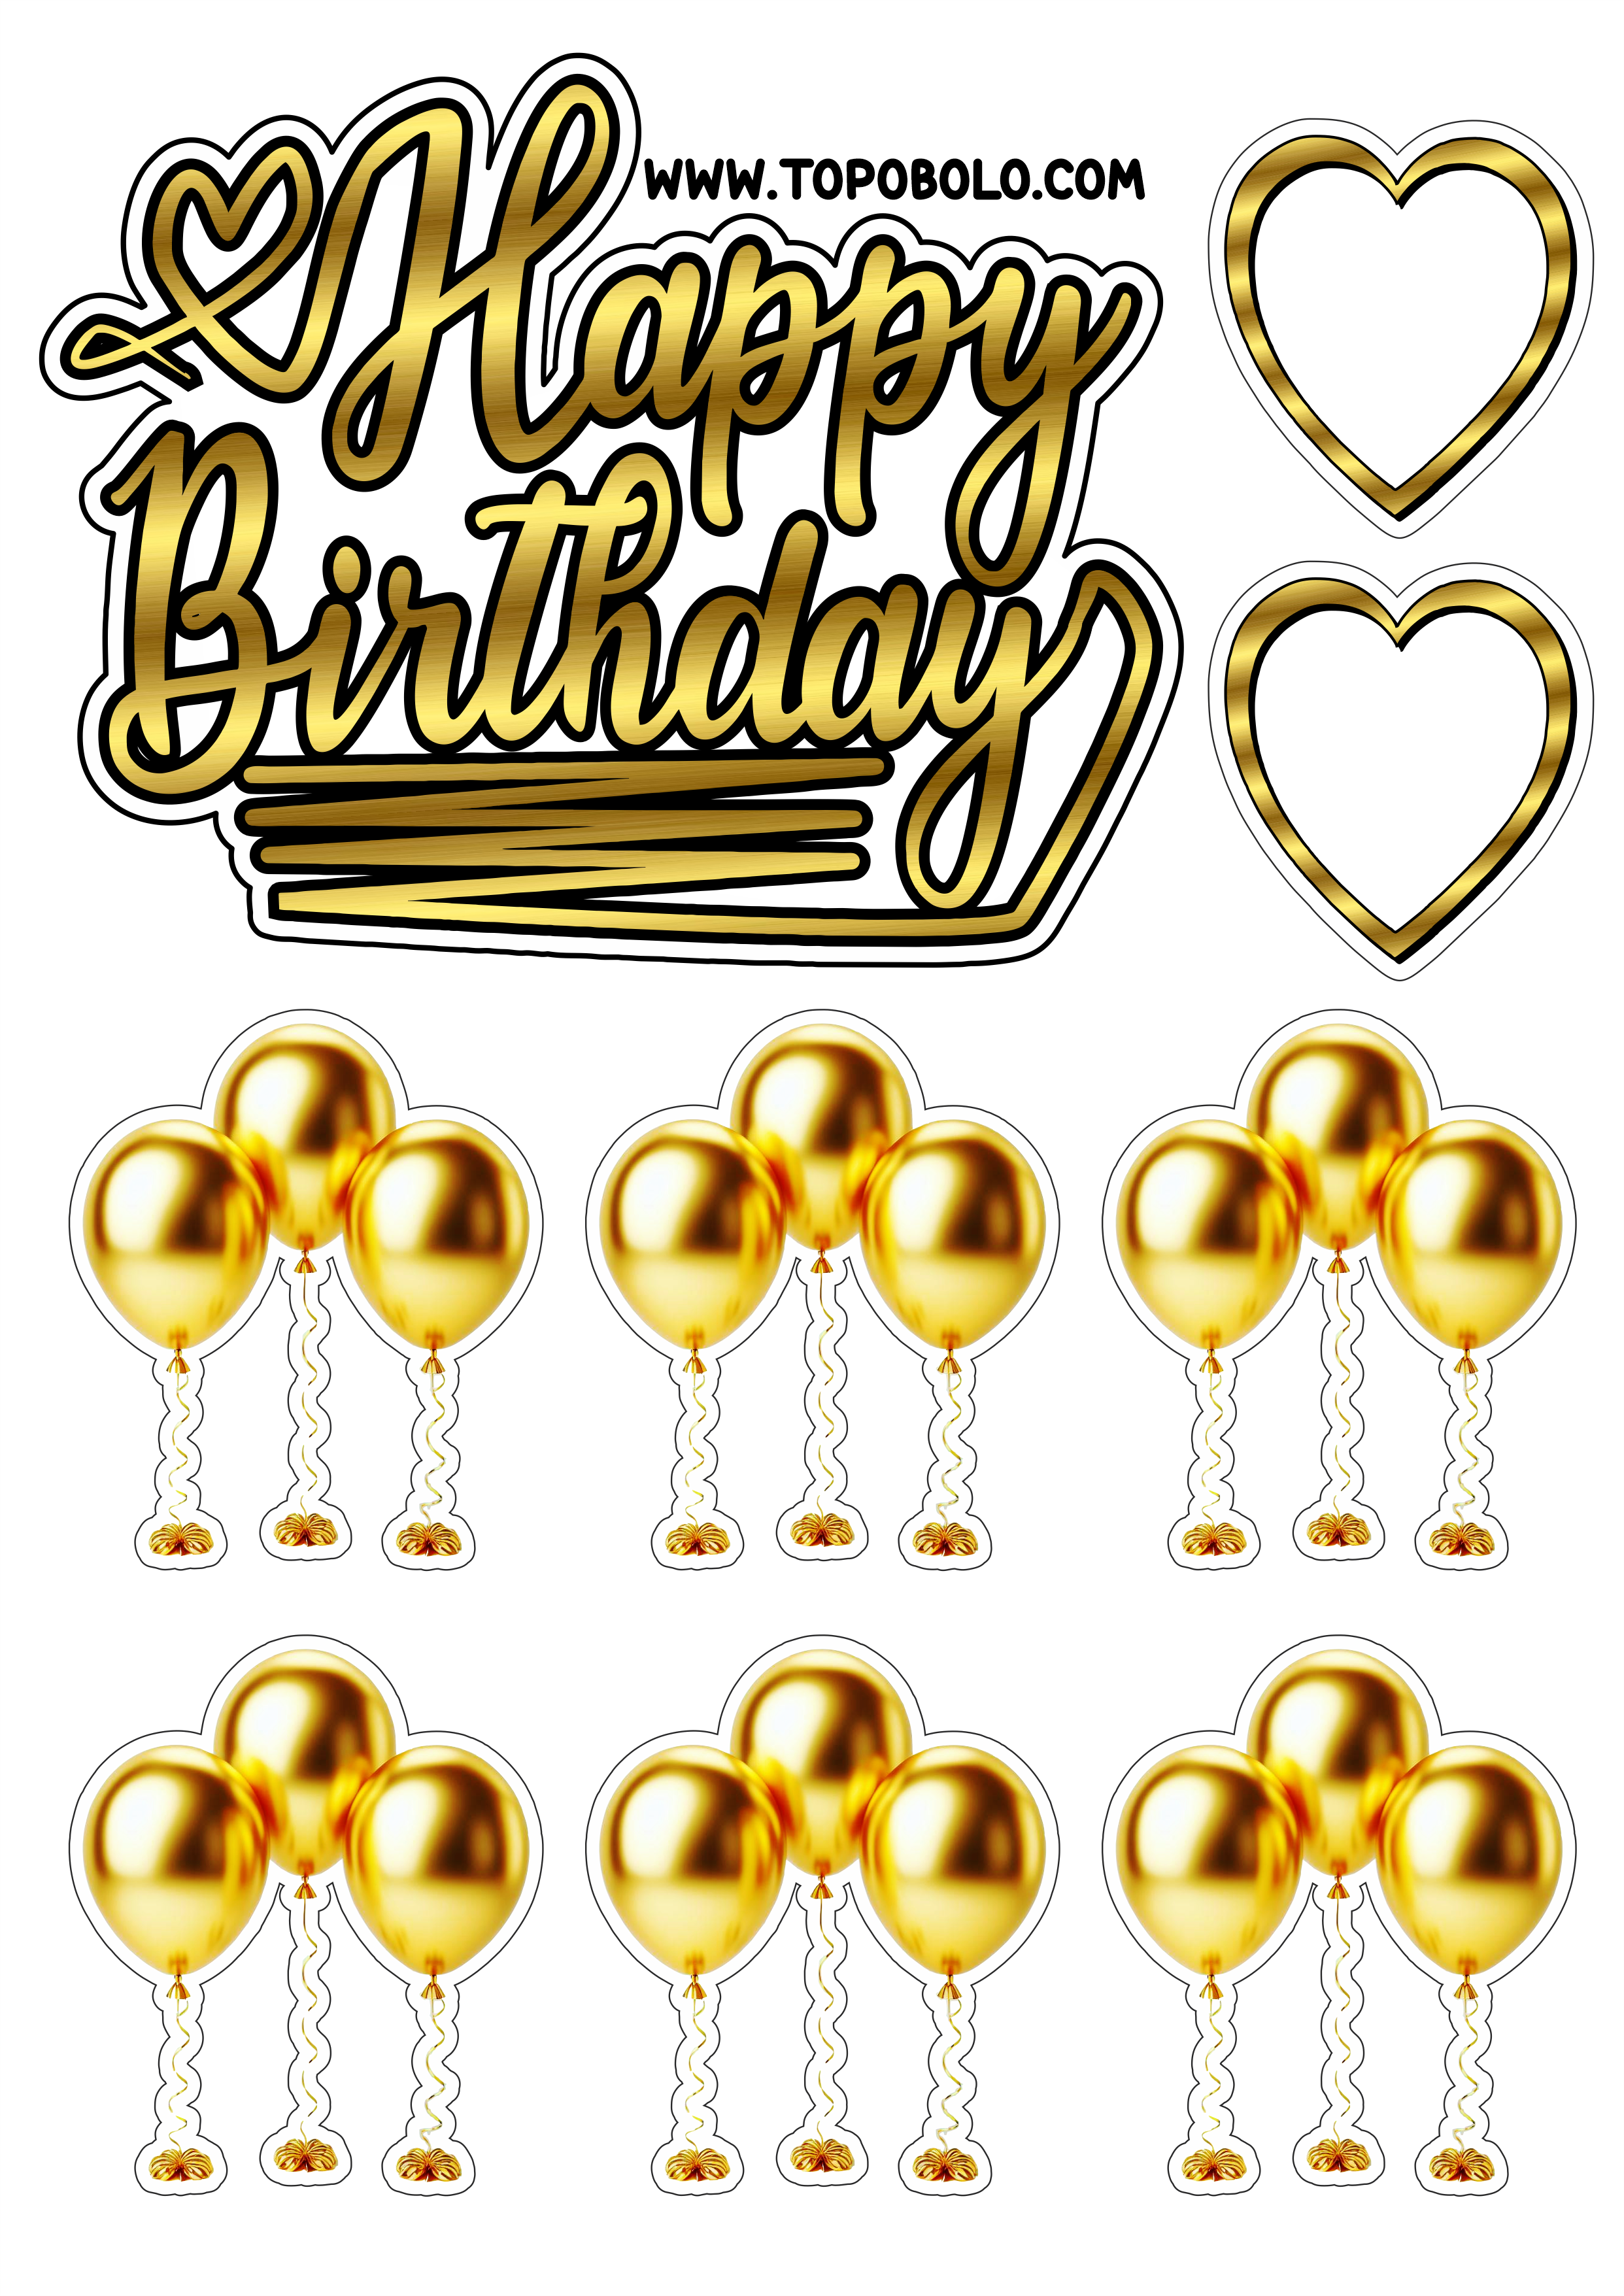 Topo de bolo para imprimir Happy Birthday aniversário dourado png